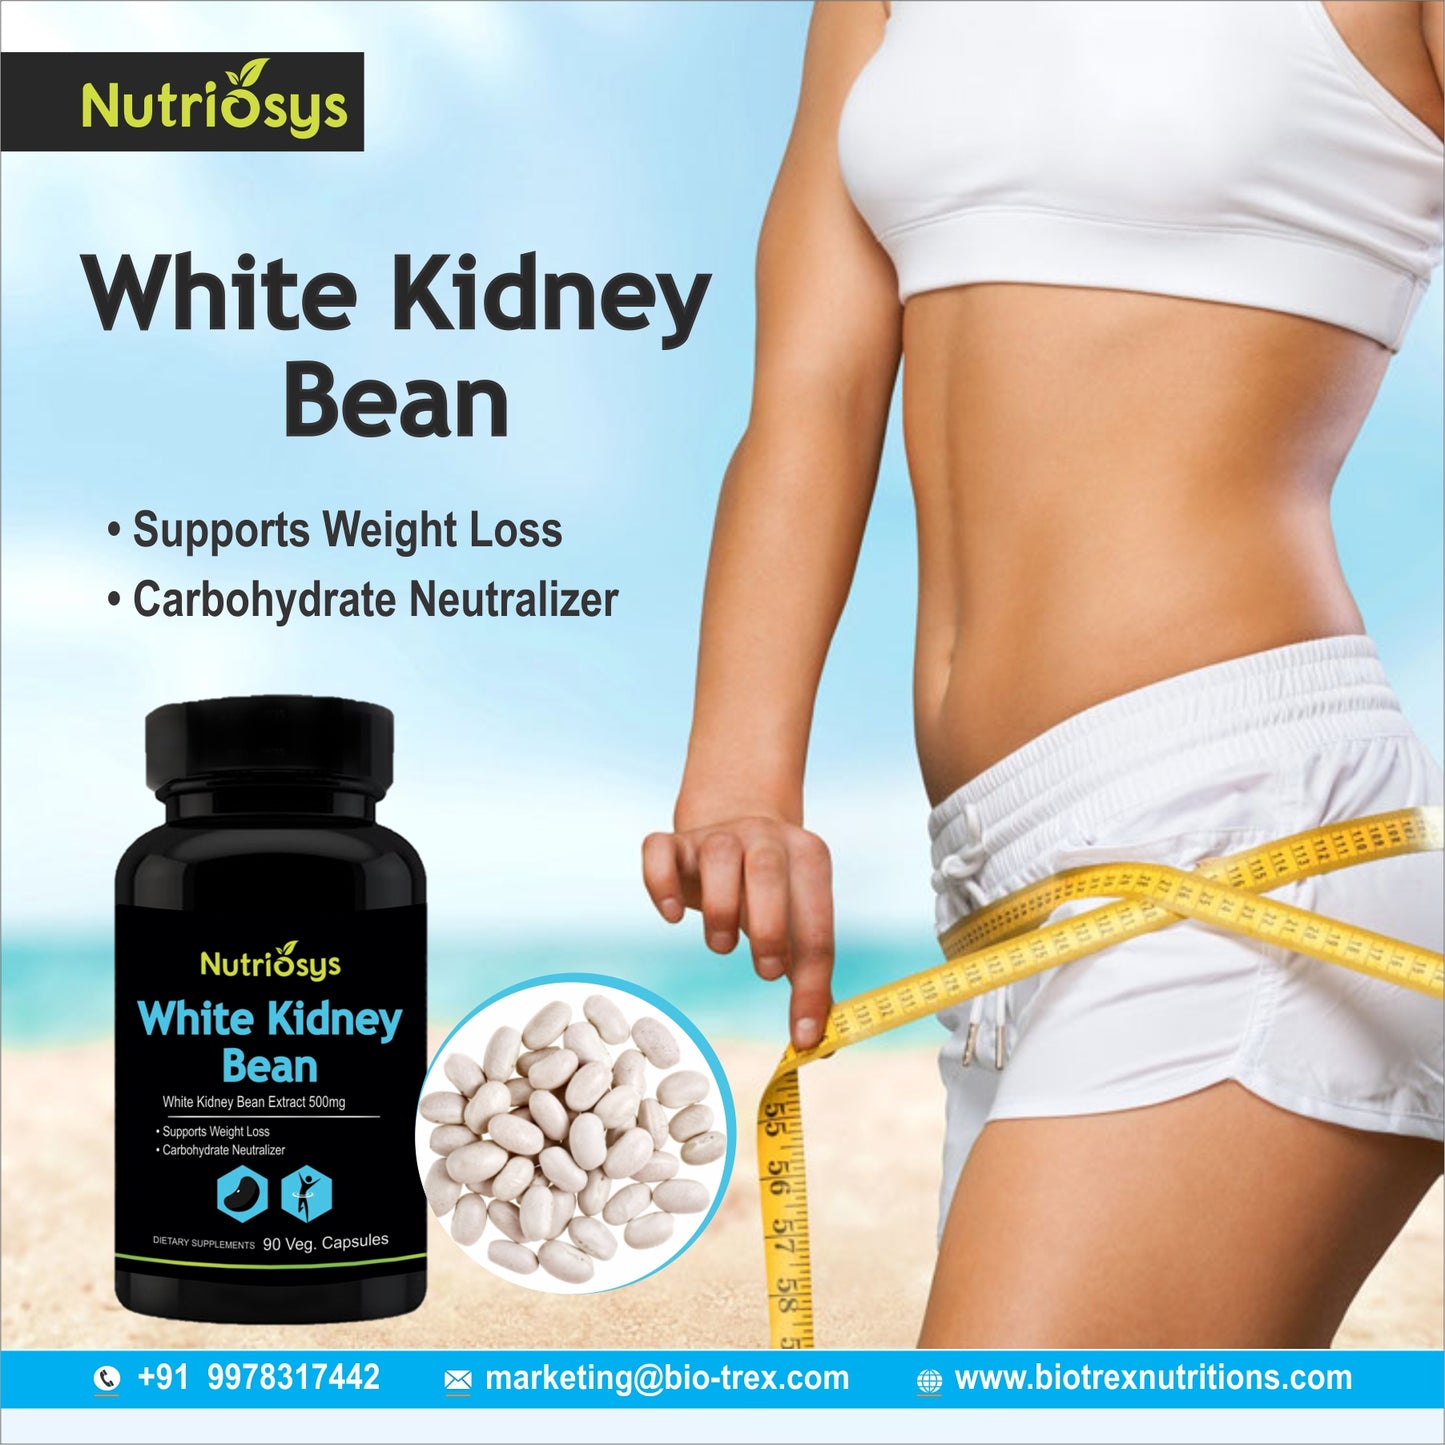 Nutriosys White Kidney Bean 500mg - 90 Capsules